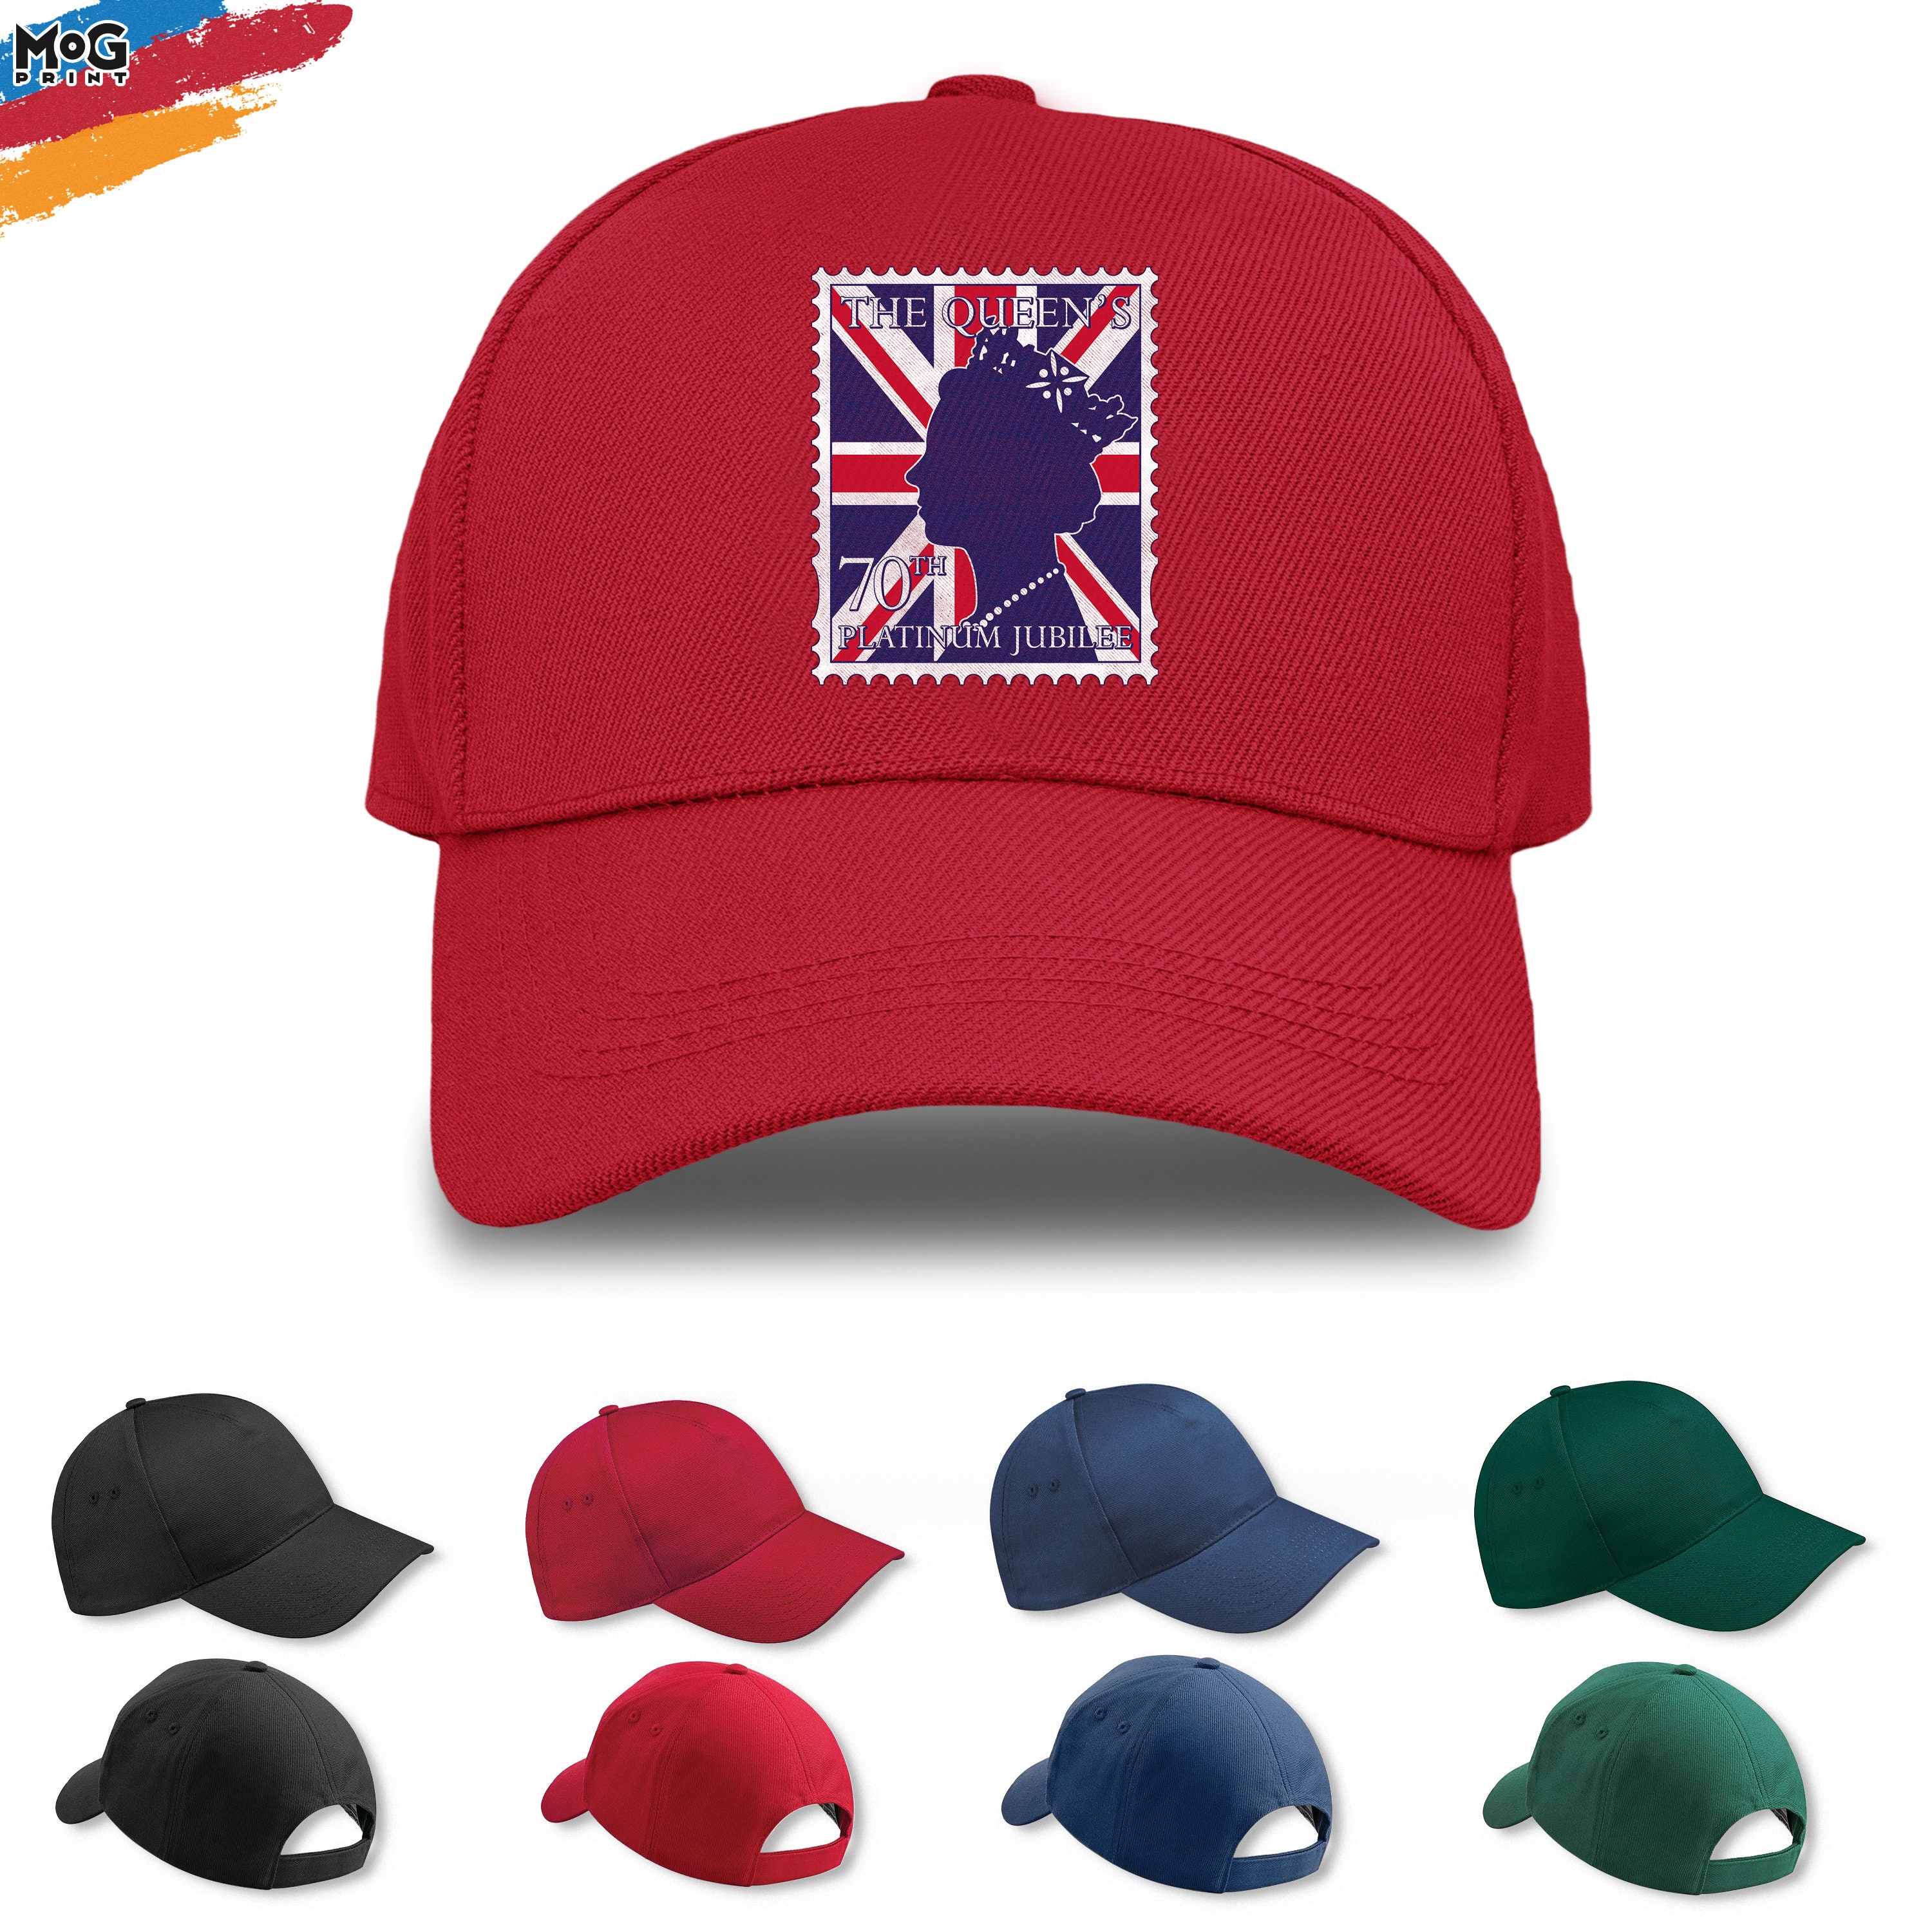 Discover Union Jack Stamp Baseball Cap | Queen Head Crown | The Queens Platinum Jubilee 2022 Gifts | Queen Elizabeth II Union Jack Flag | Unisex Hat